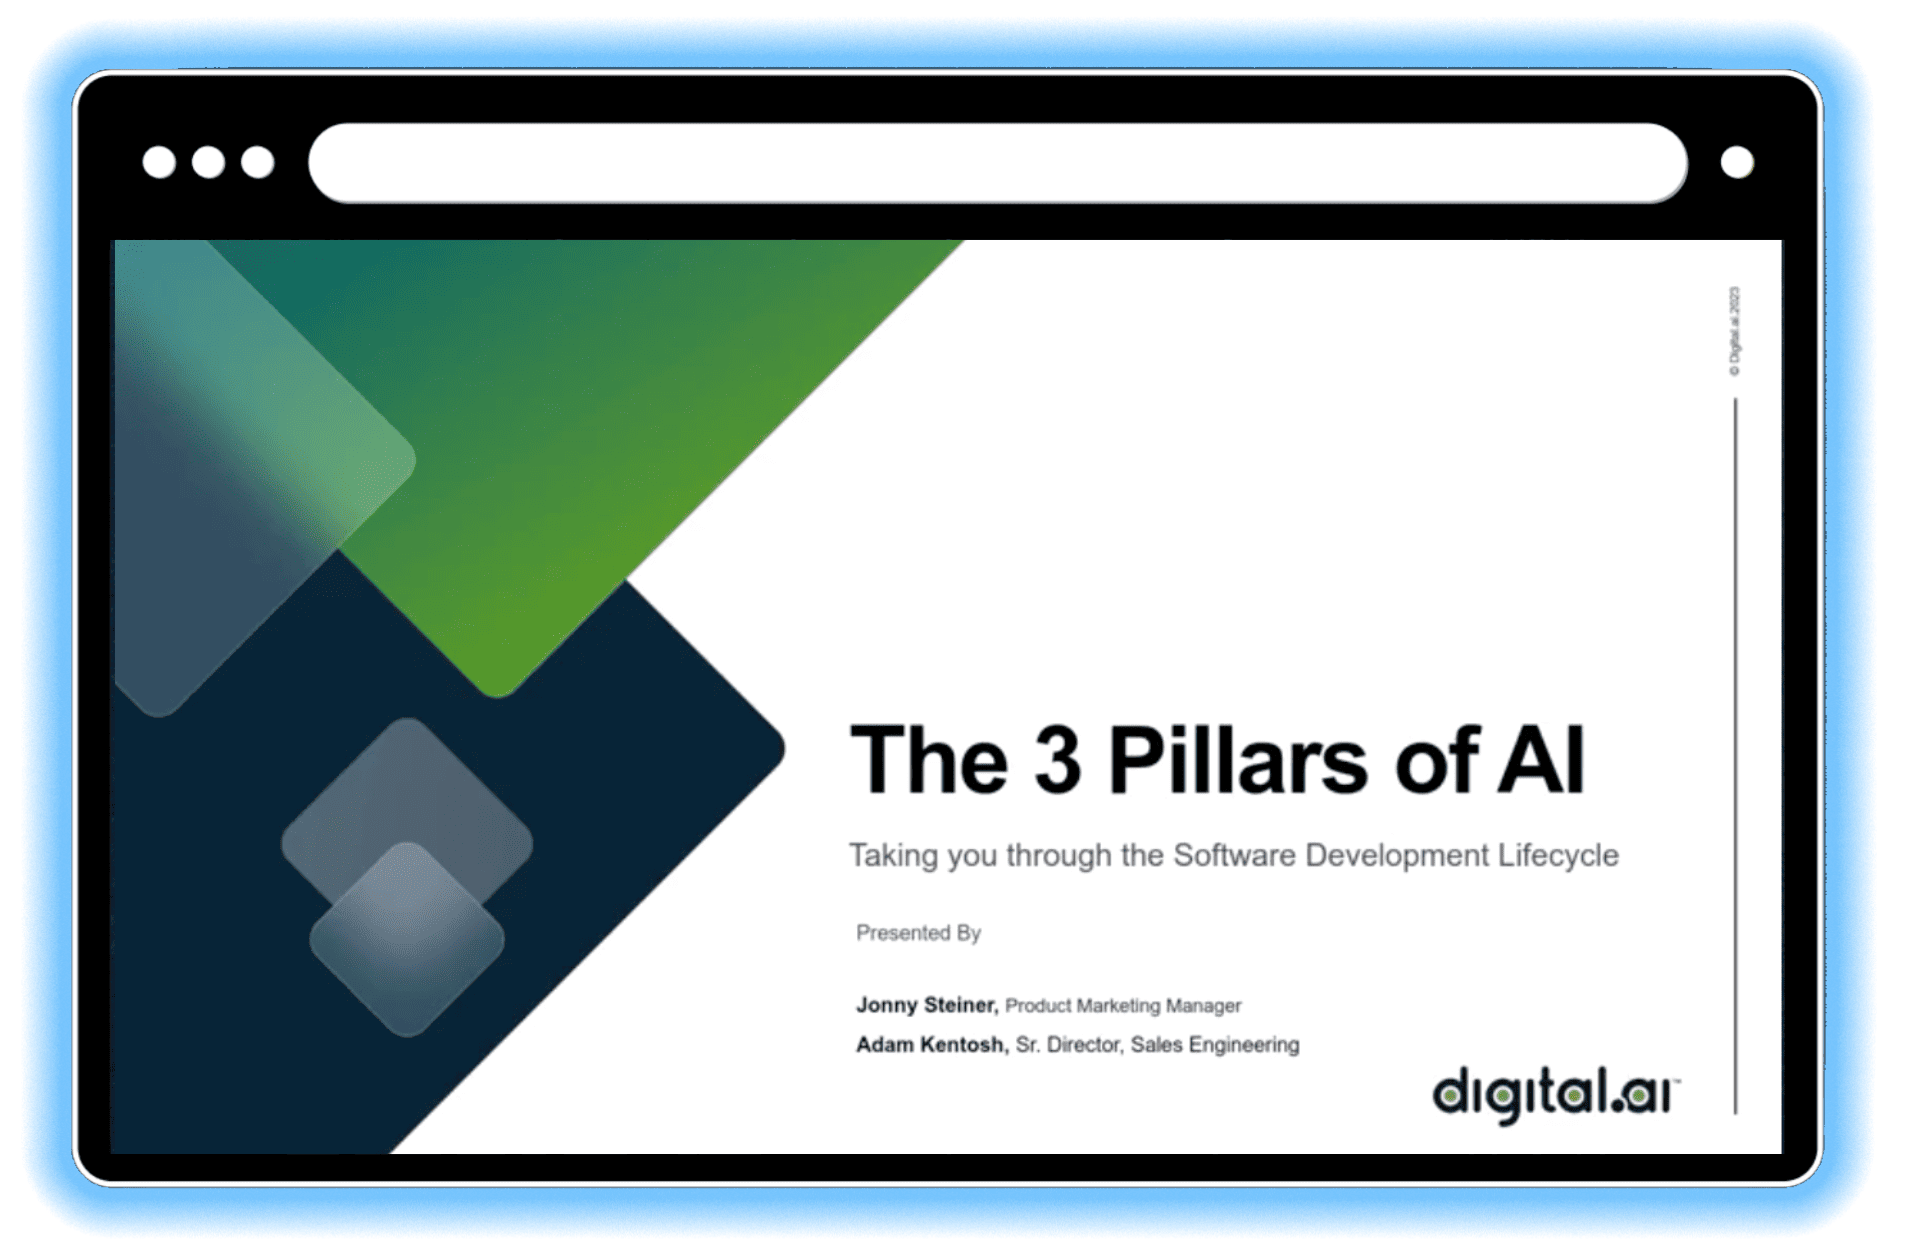 Glowing: The 3 Pillars of AI